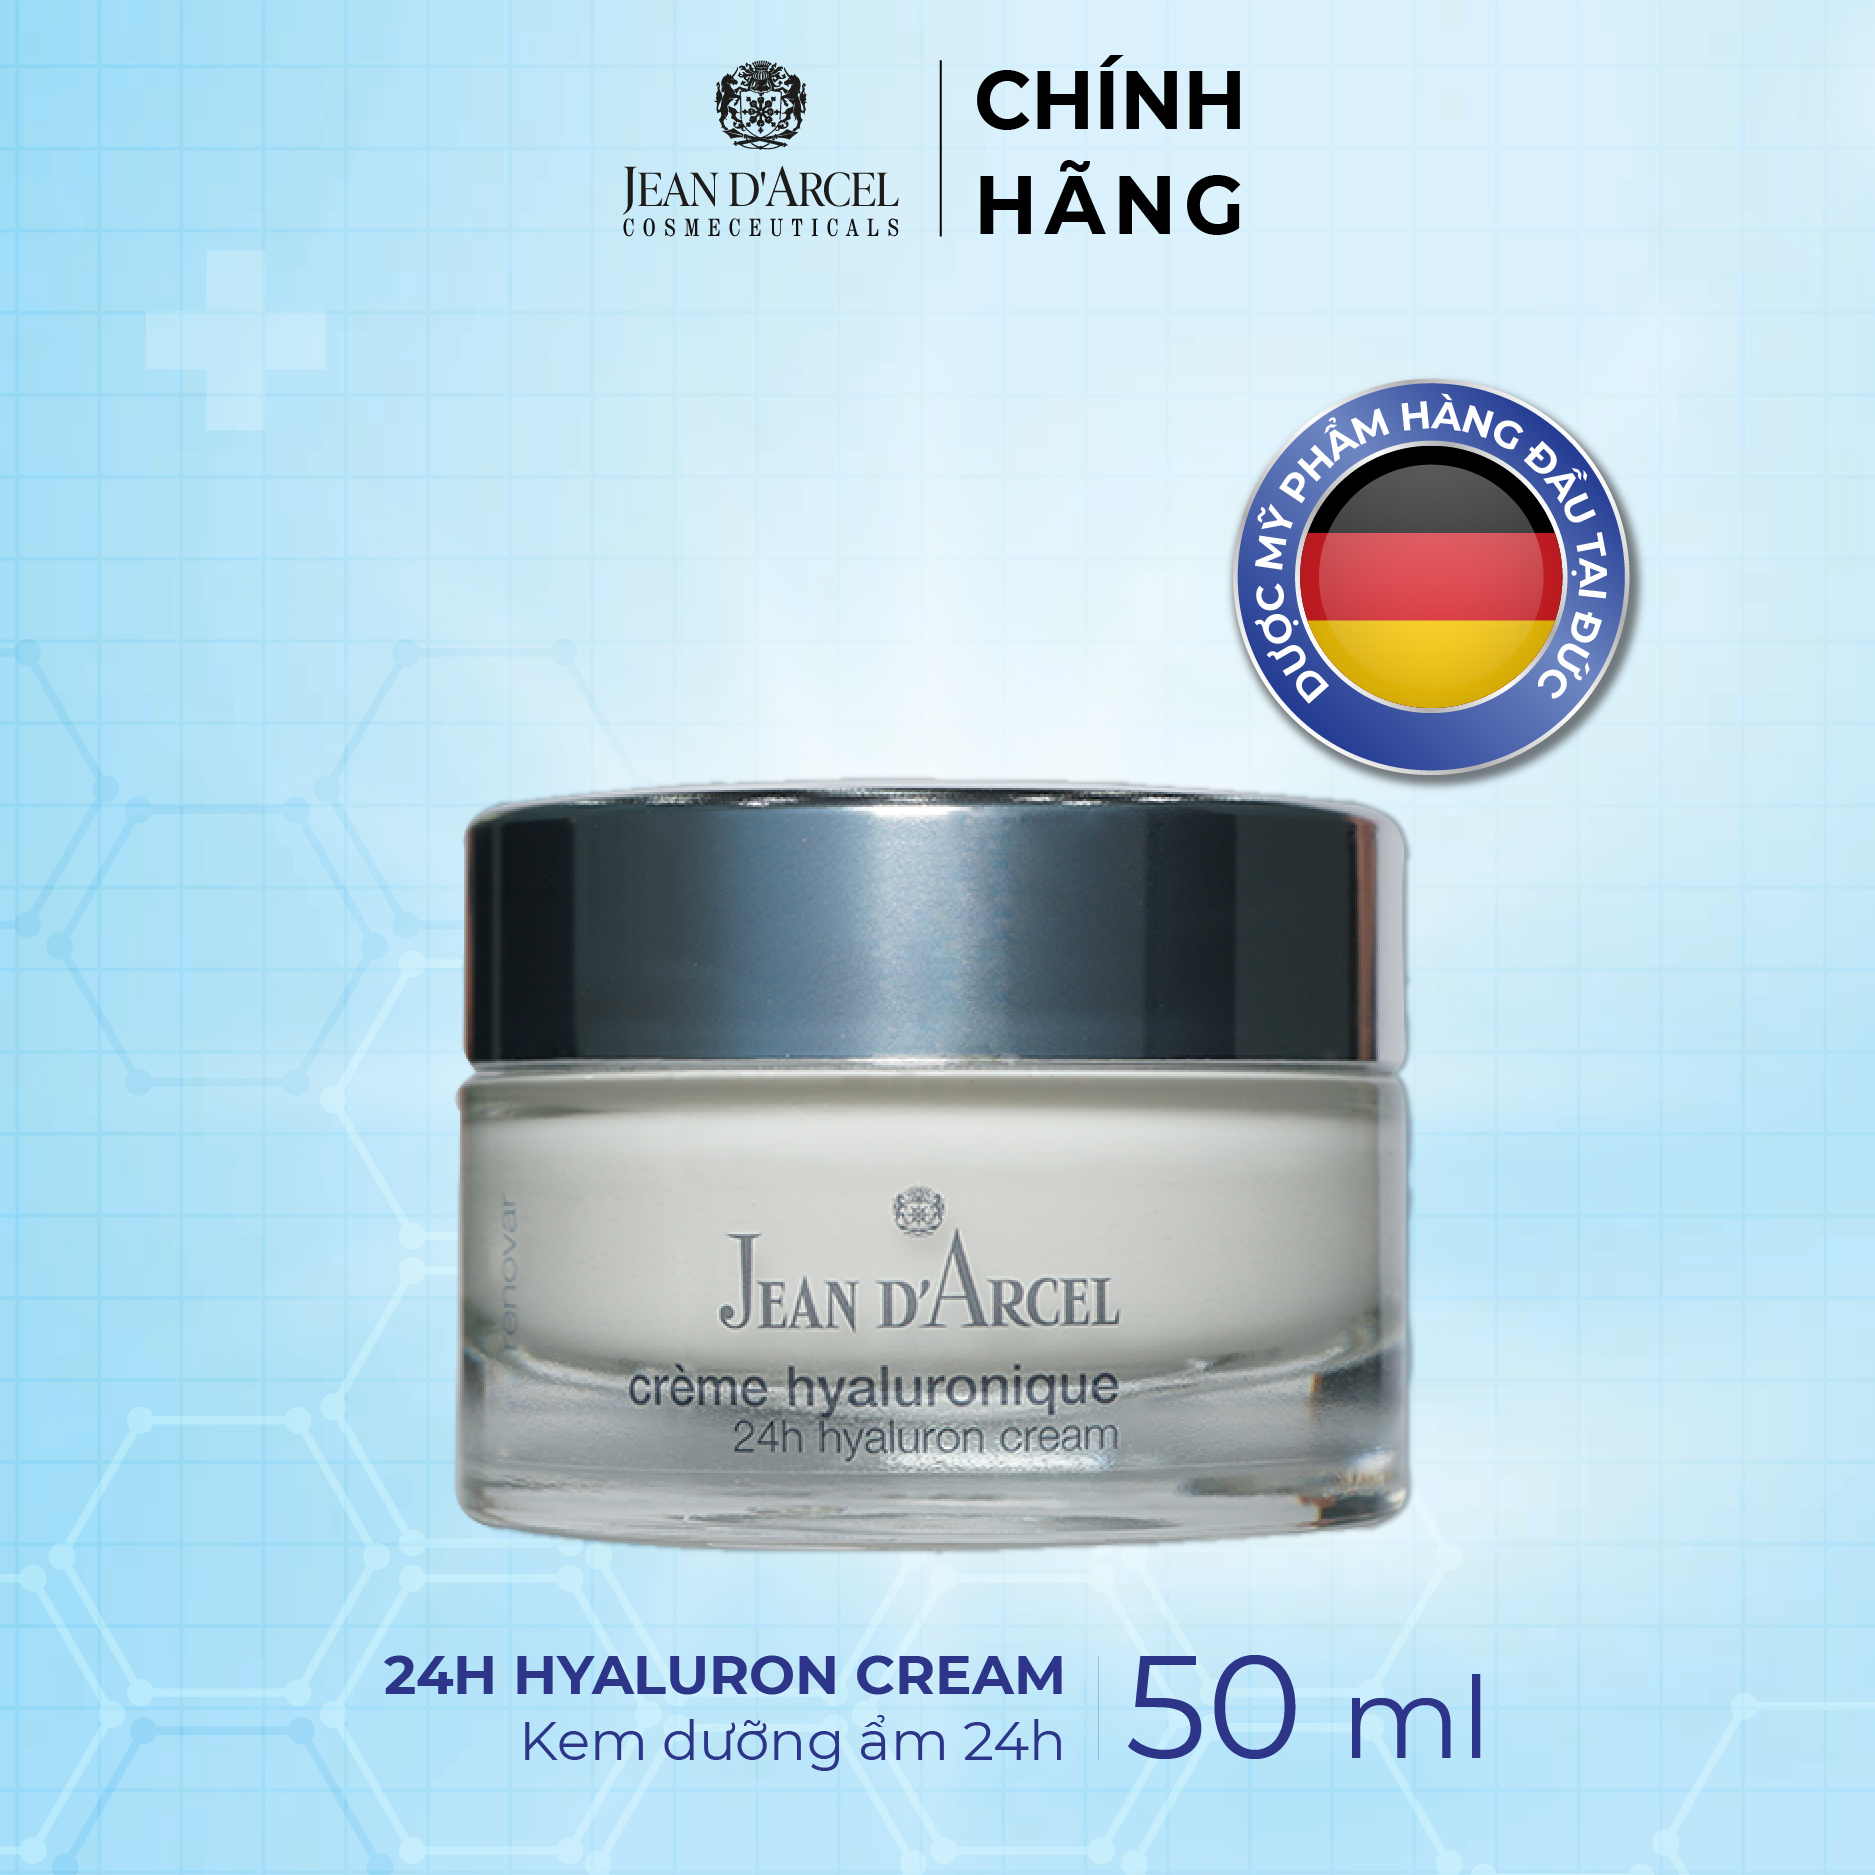 J115 Kem dưỡng ẩm 24h Renovar - 24h Hyaluron Cream (Crème Hyaluronique) 50ml - Jean d'Arcel